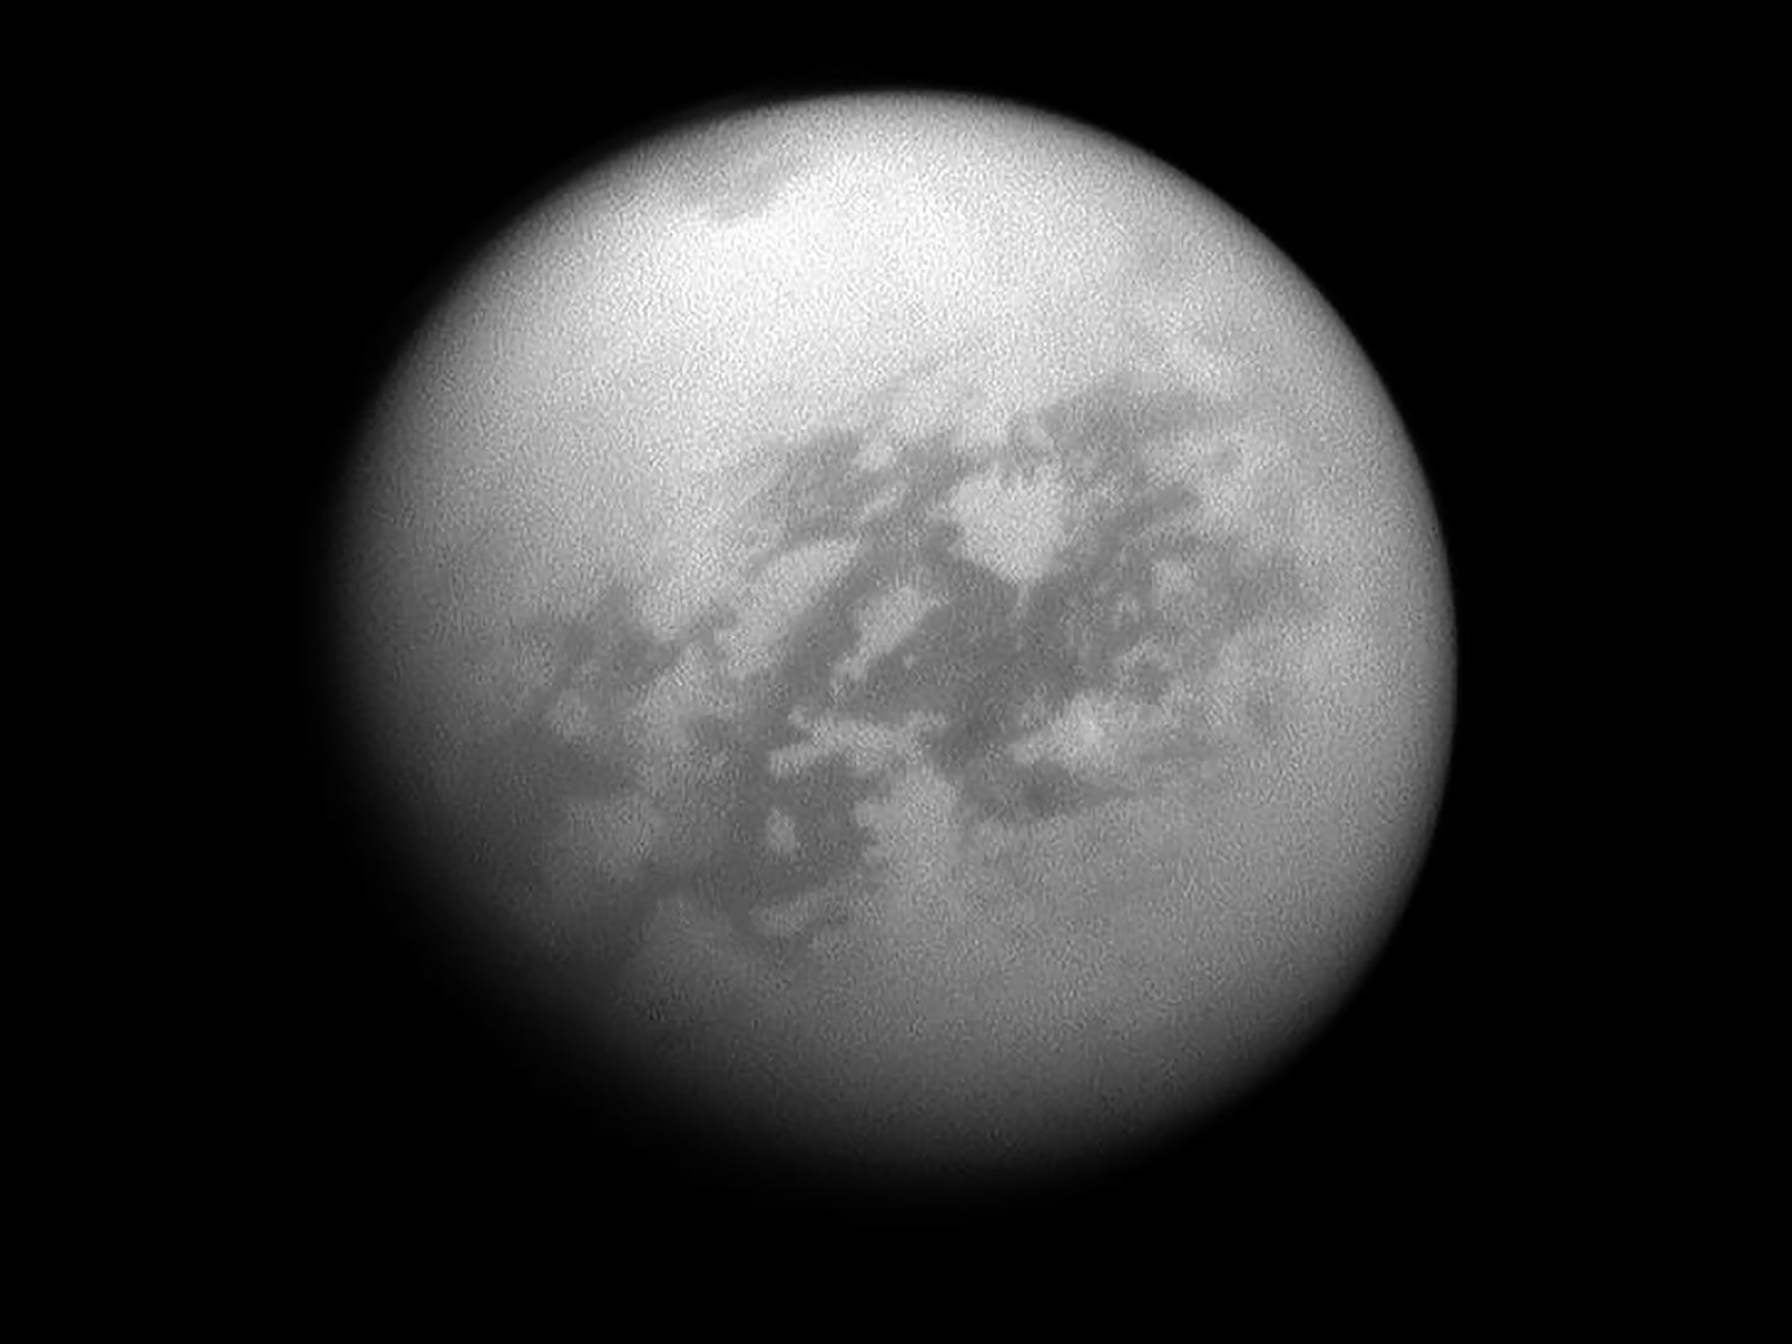 Titan is Saturn’s biggest moon